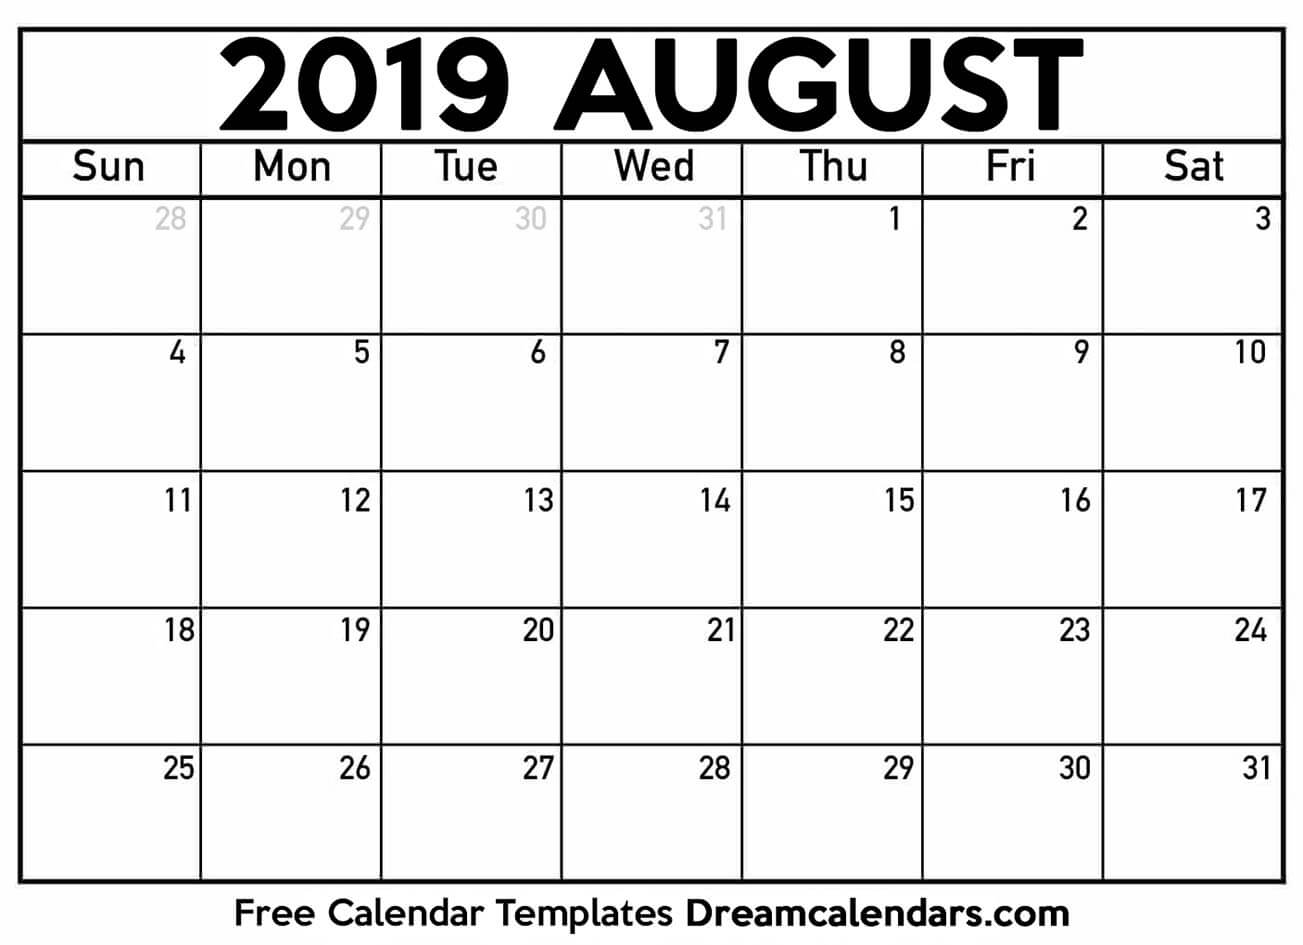 August 2019 calendar free blank printable templates